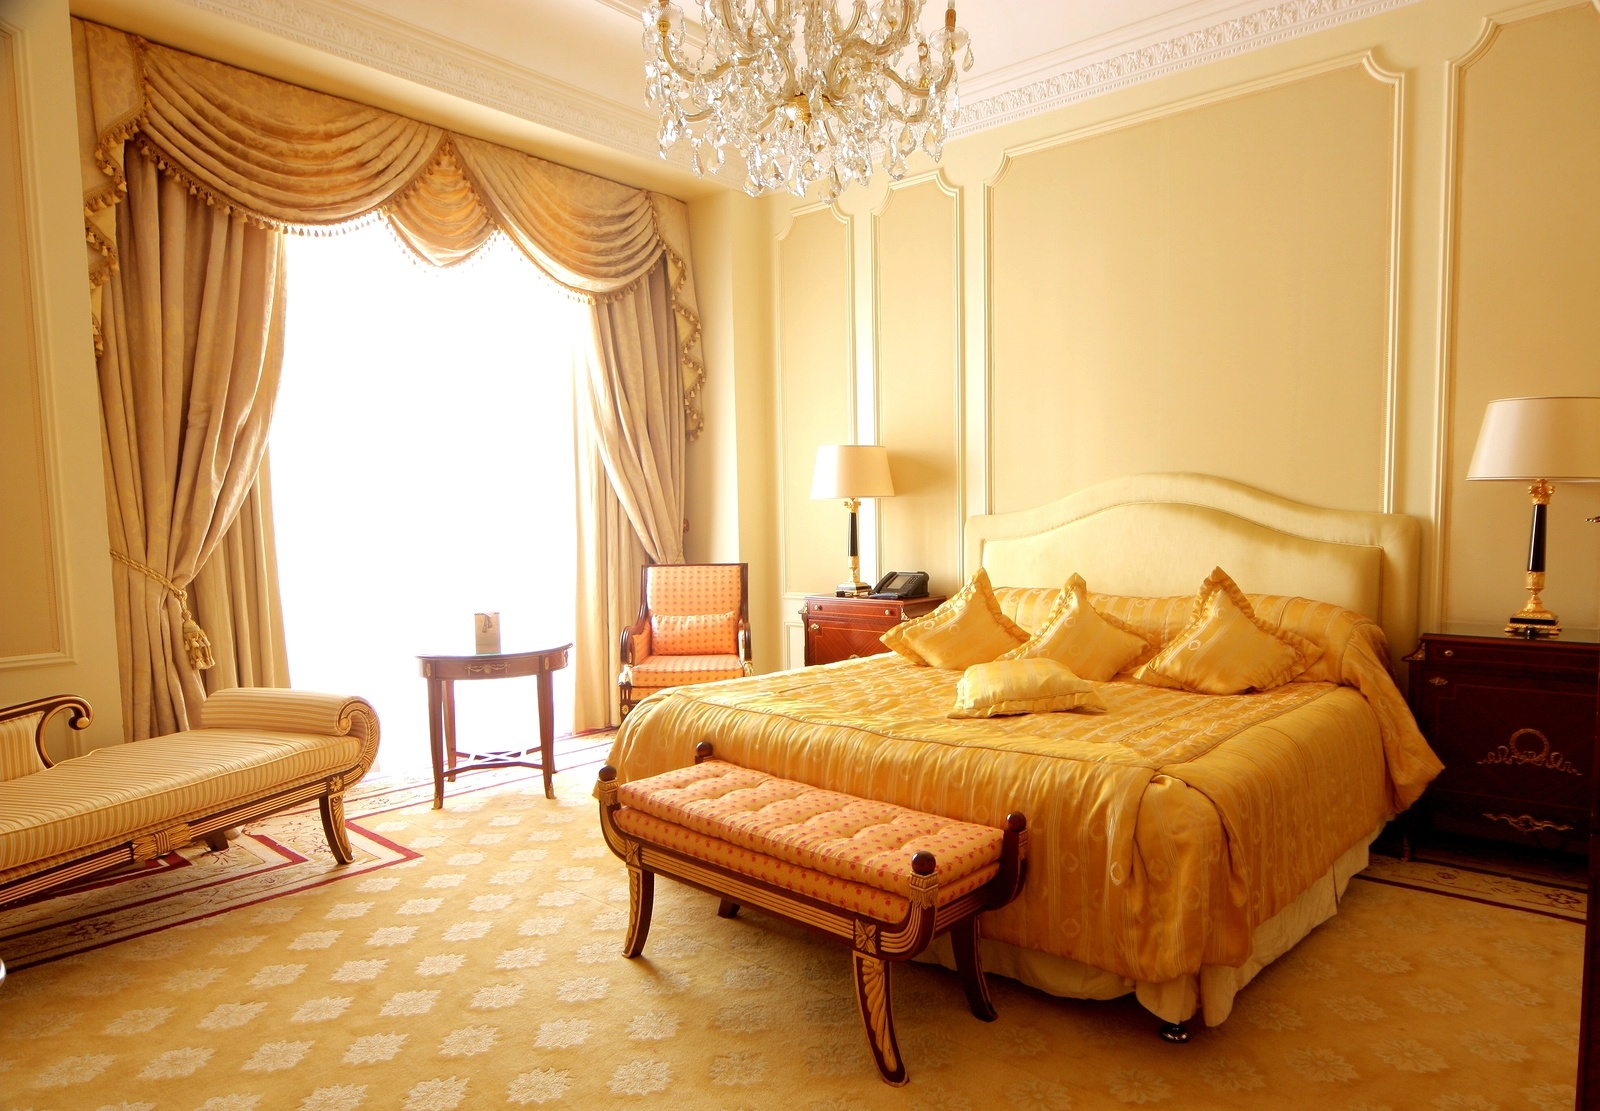 bigstock-a-luxury-hotel-room-12149534.jpg